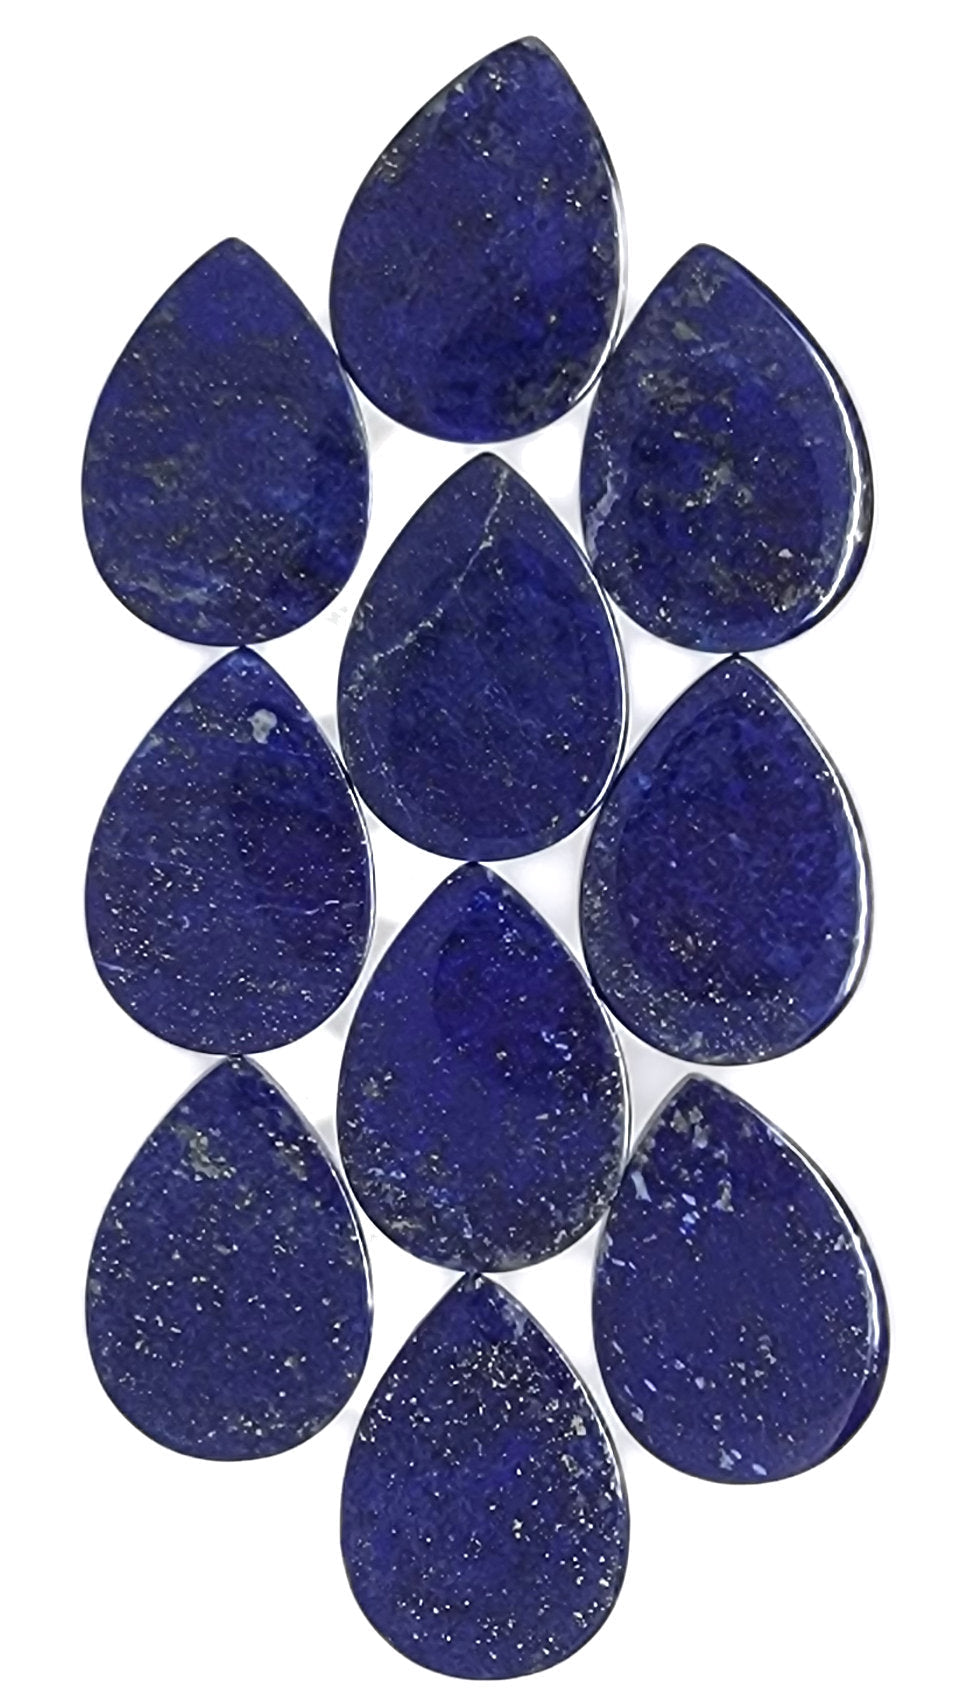 Lapis Lazuli with Pyrite Flecks 18x25mm Teardrop Cabochon